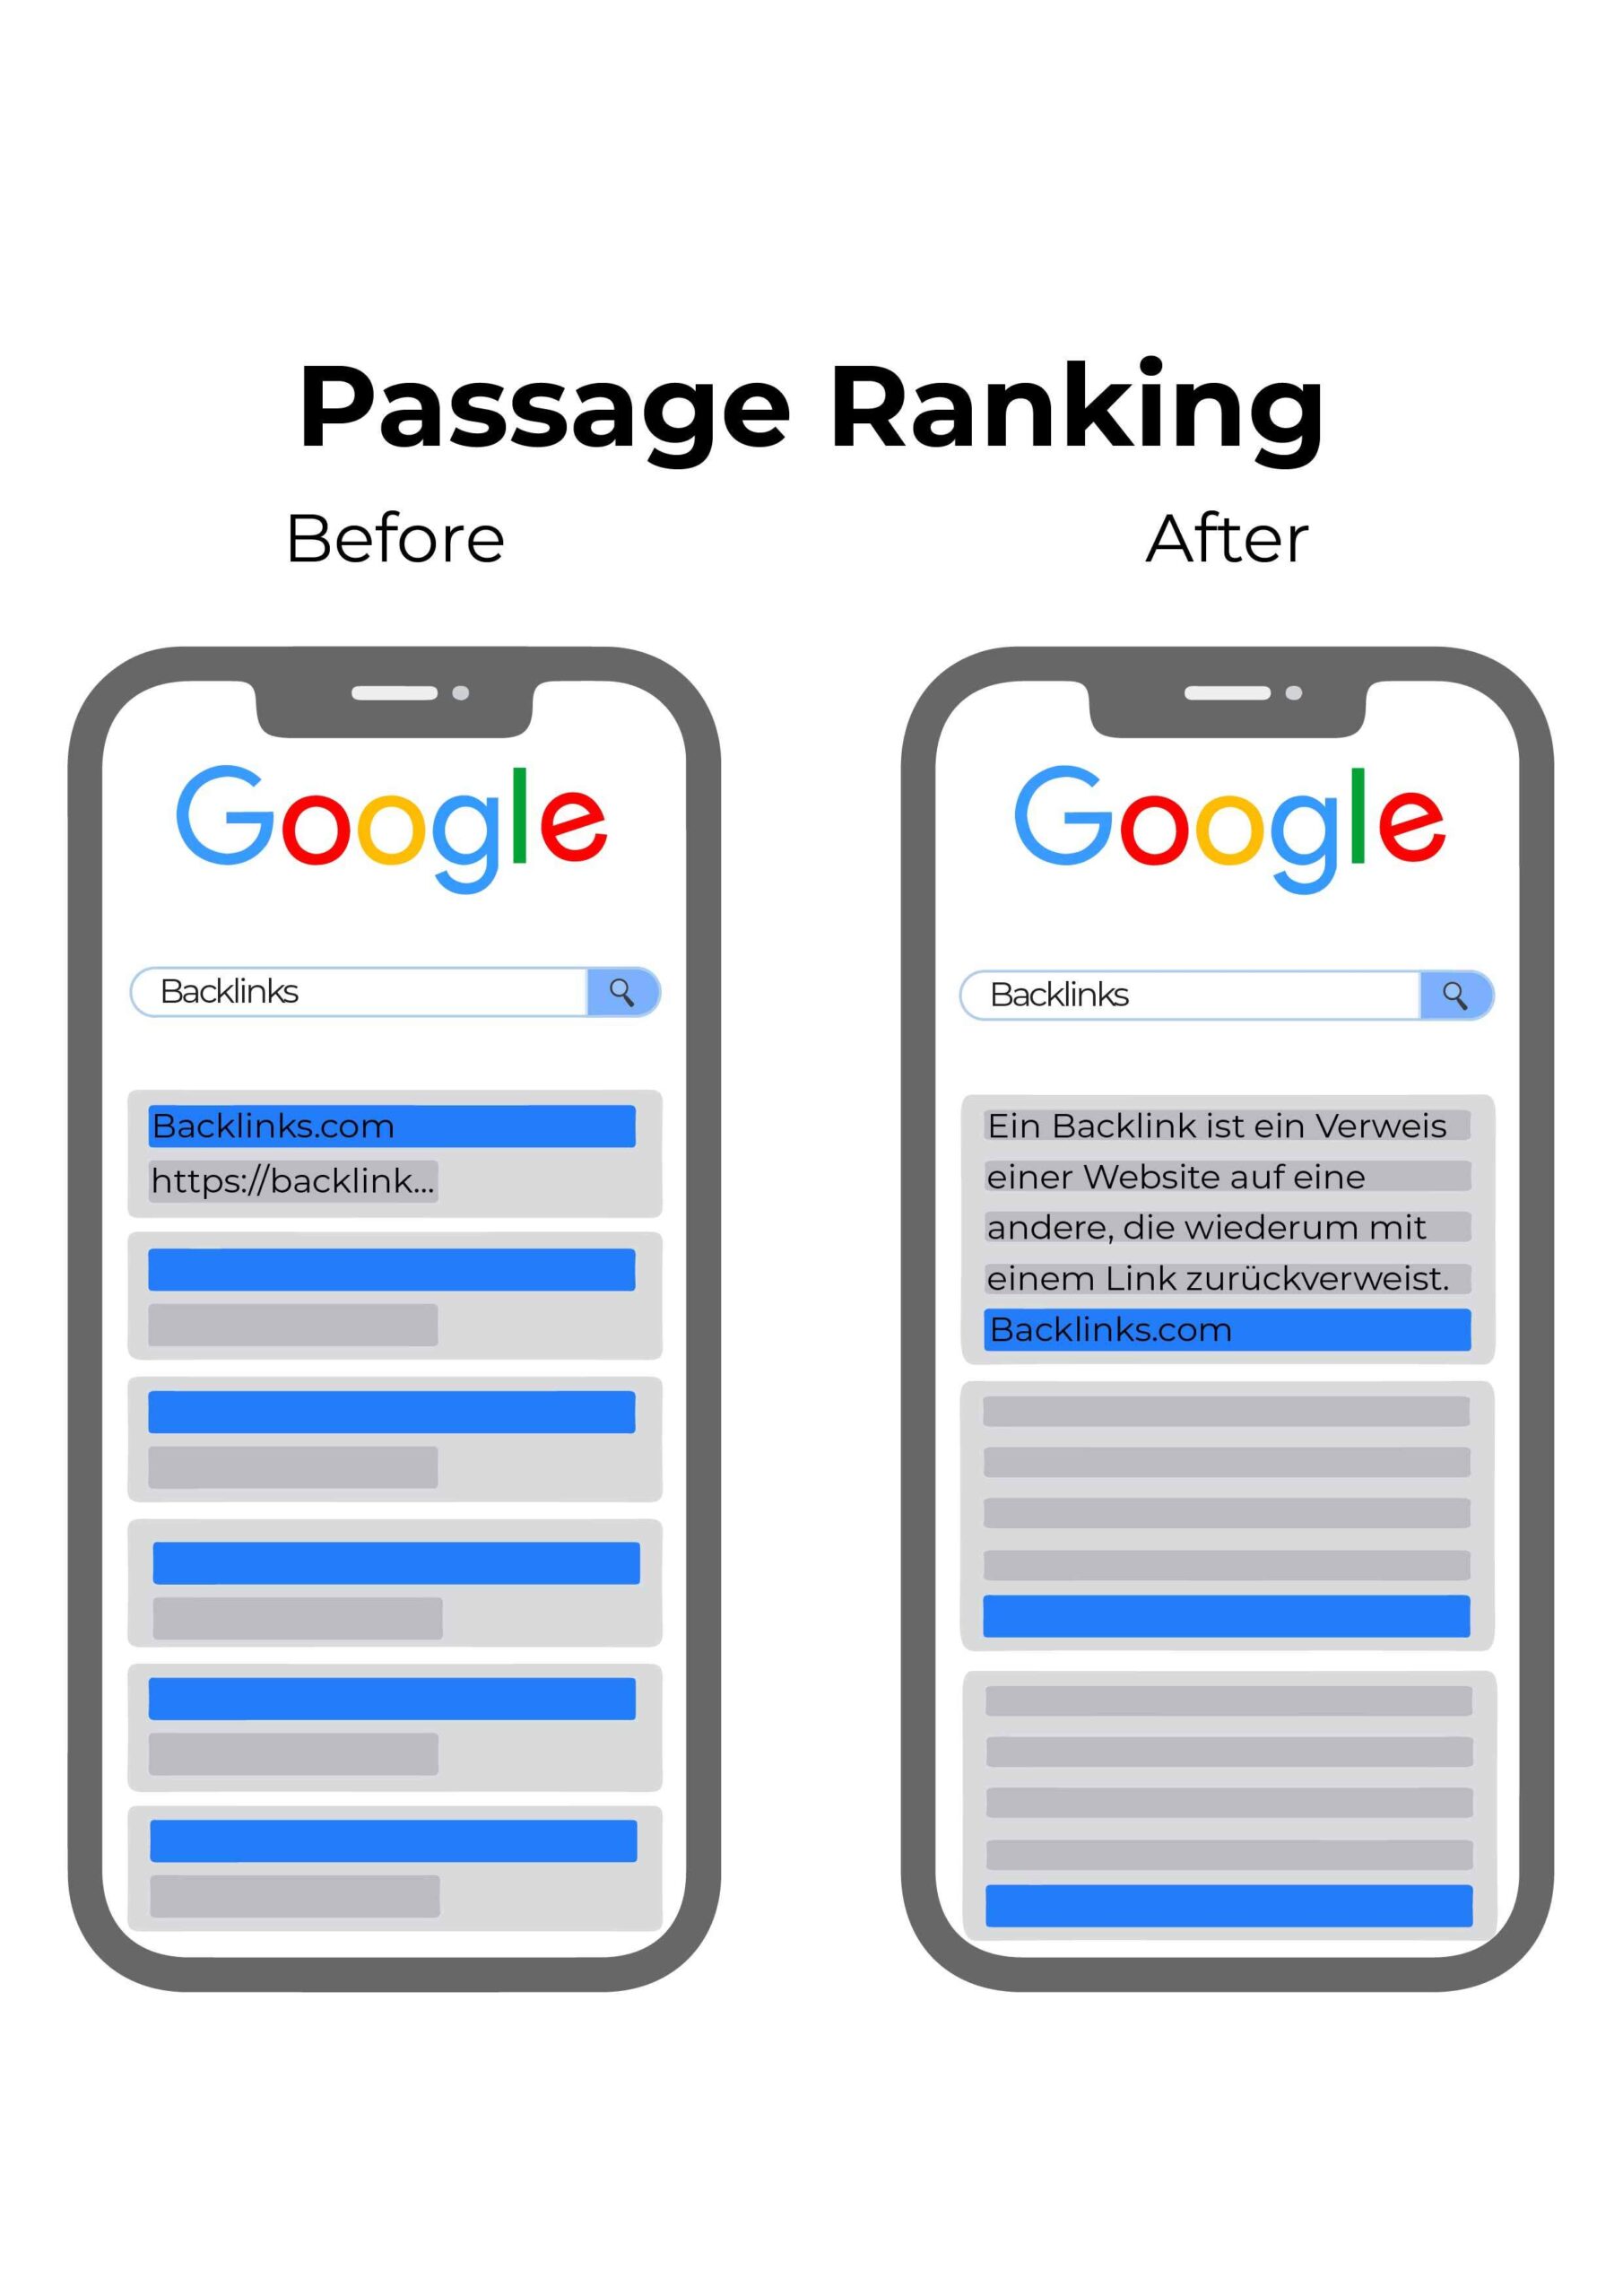 Passage Ranking